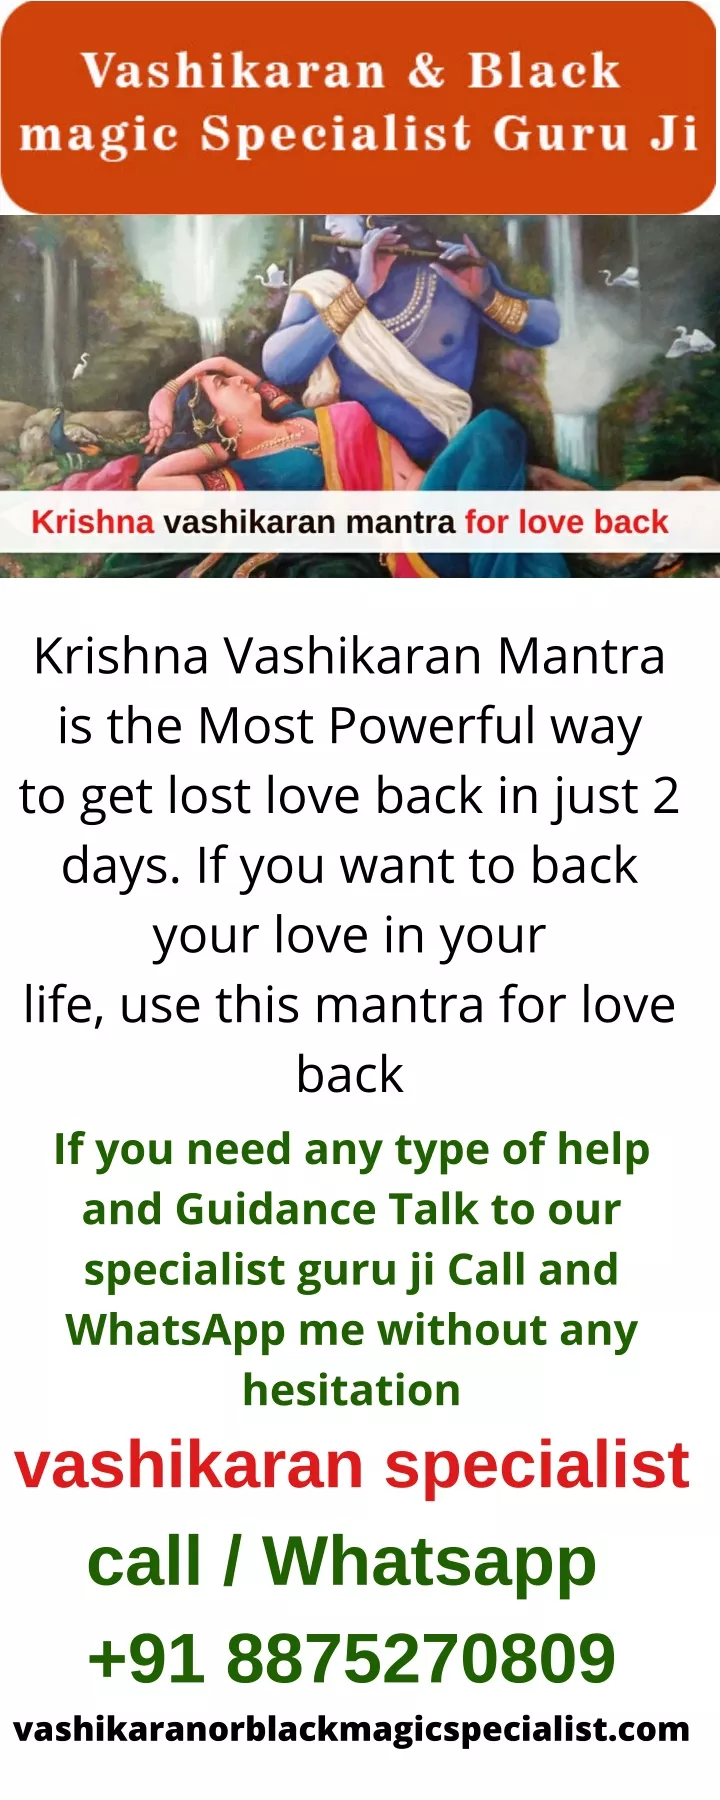 krishna vashikaran mantra is the most powerful